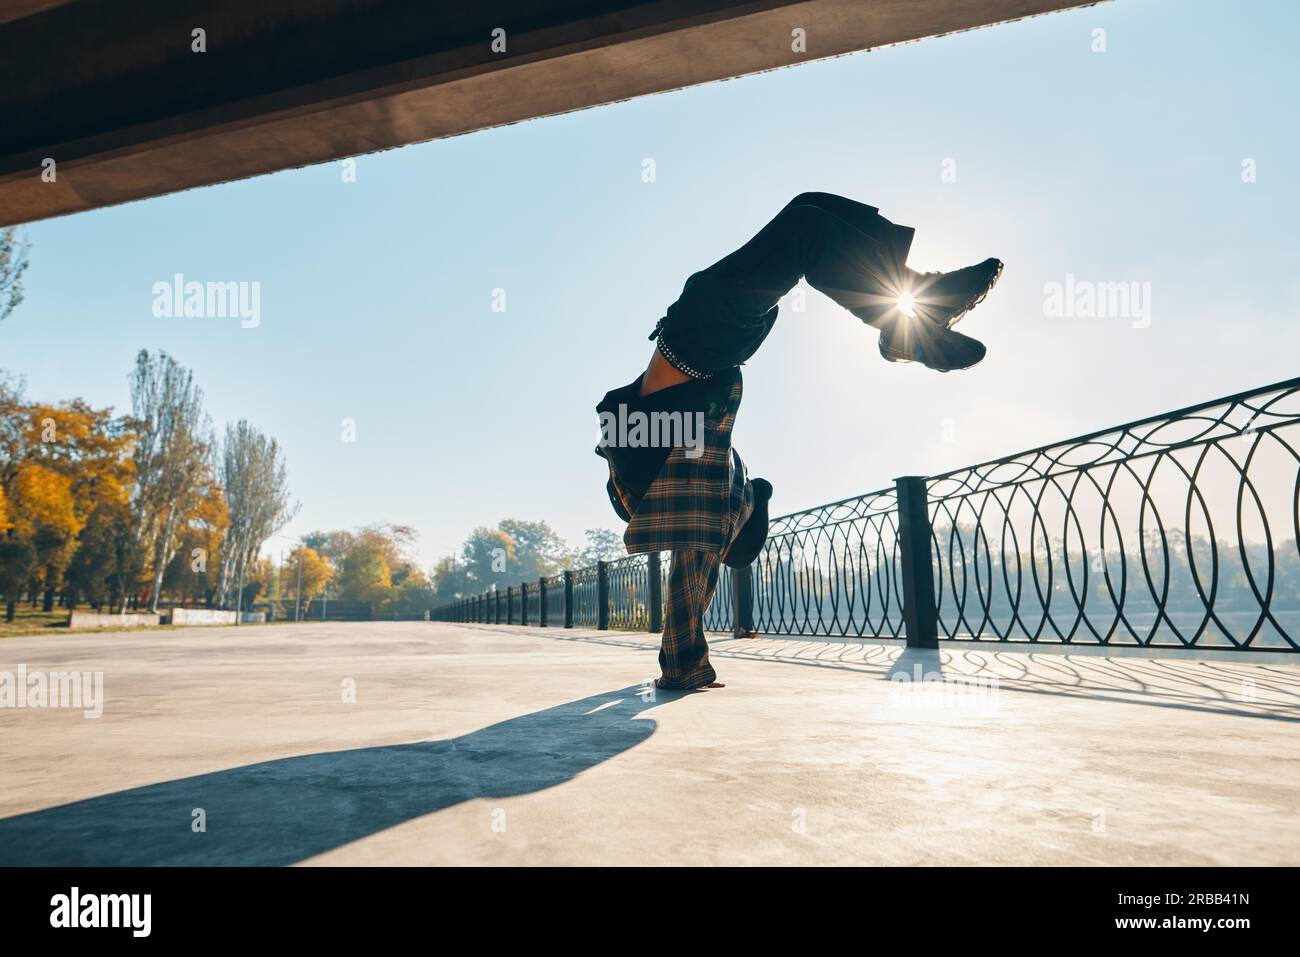 Young man break dancer dancing on urban background performing acrobatic stunts. Street artist breakdancing outdoors Stock Photo